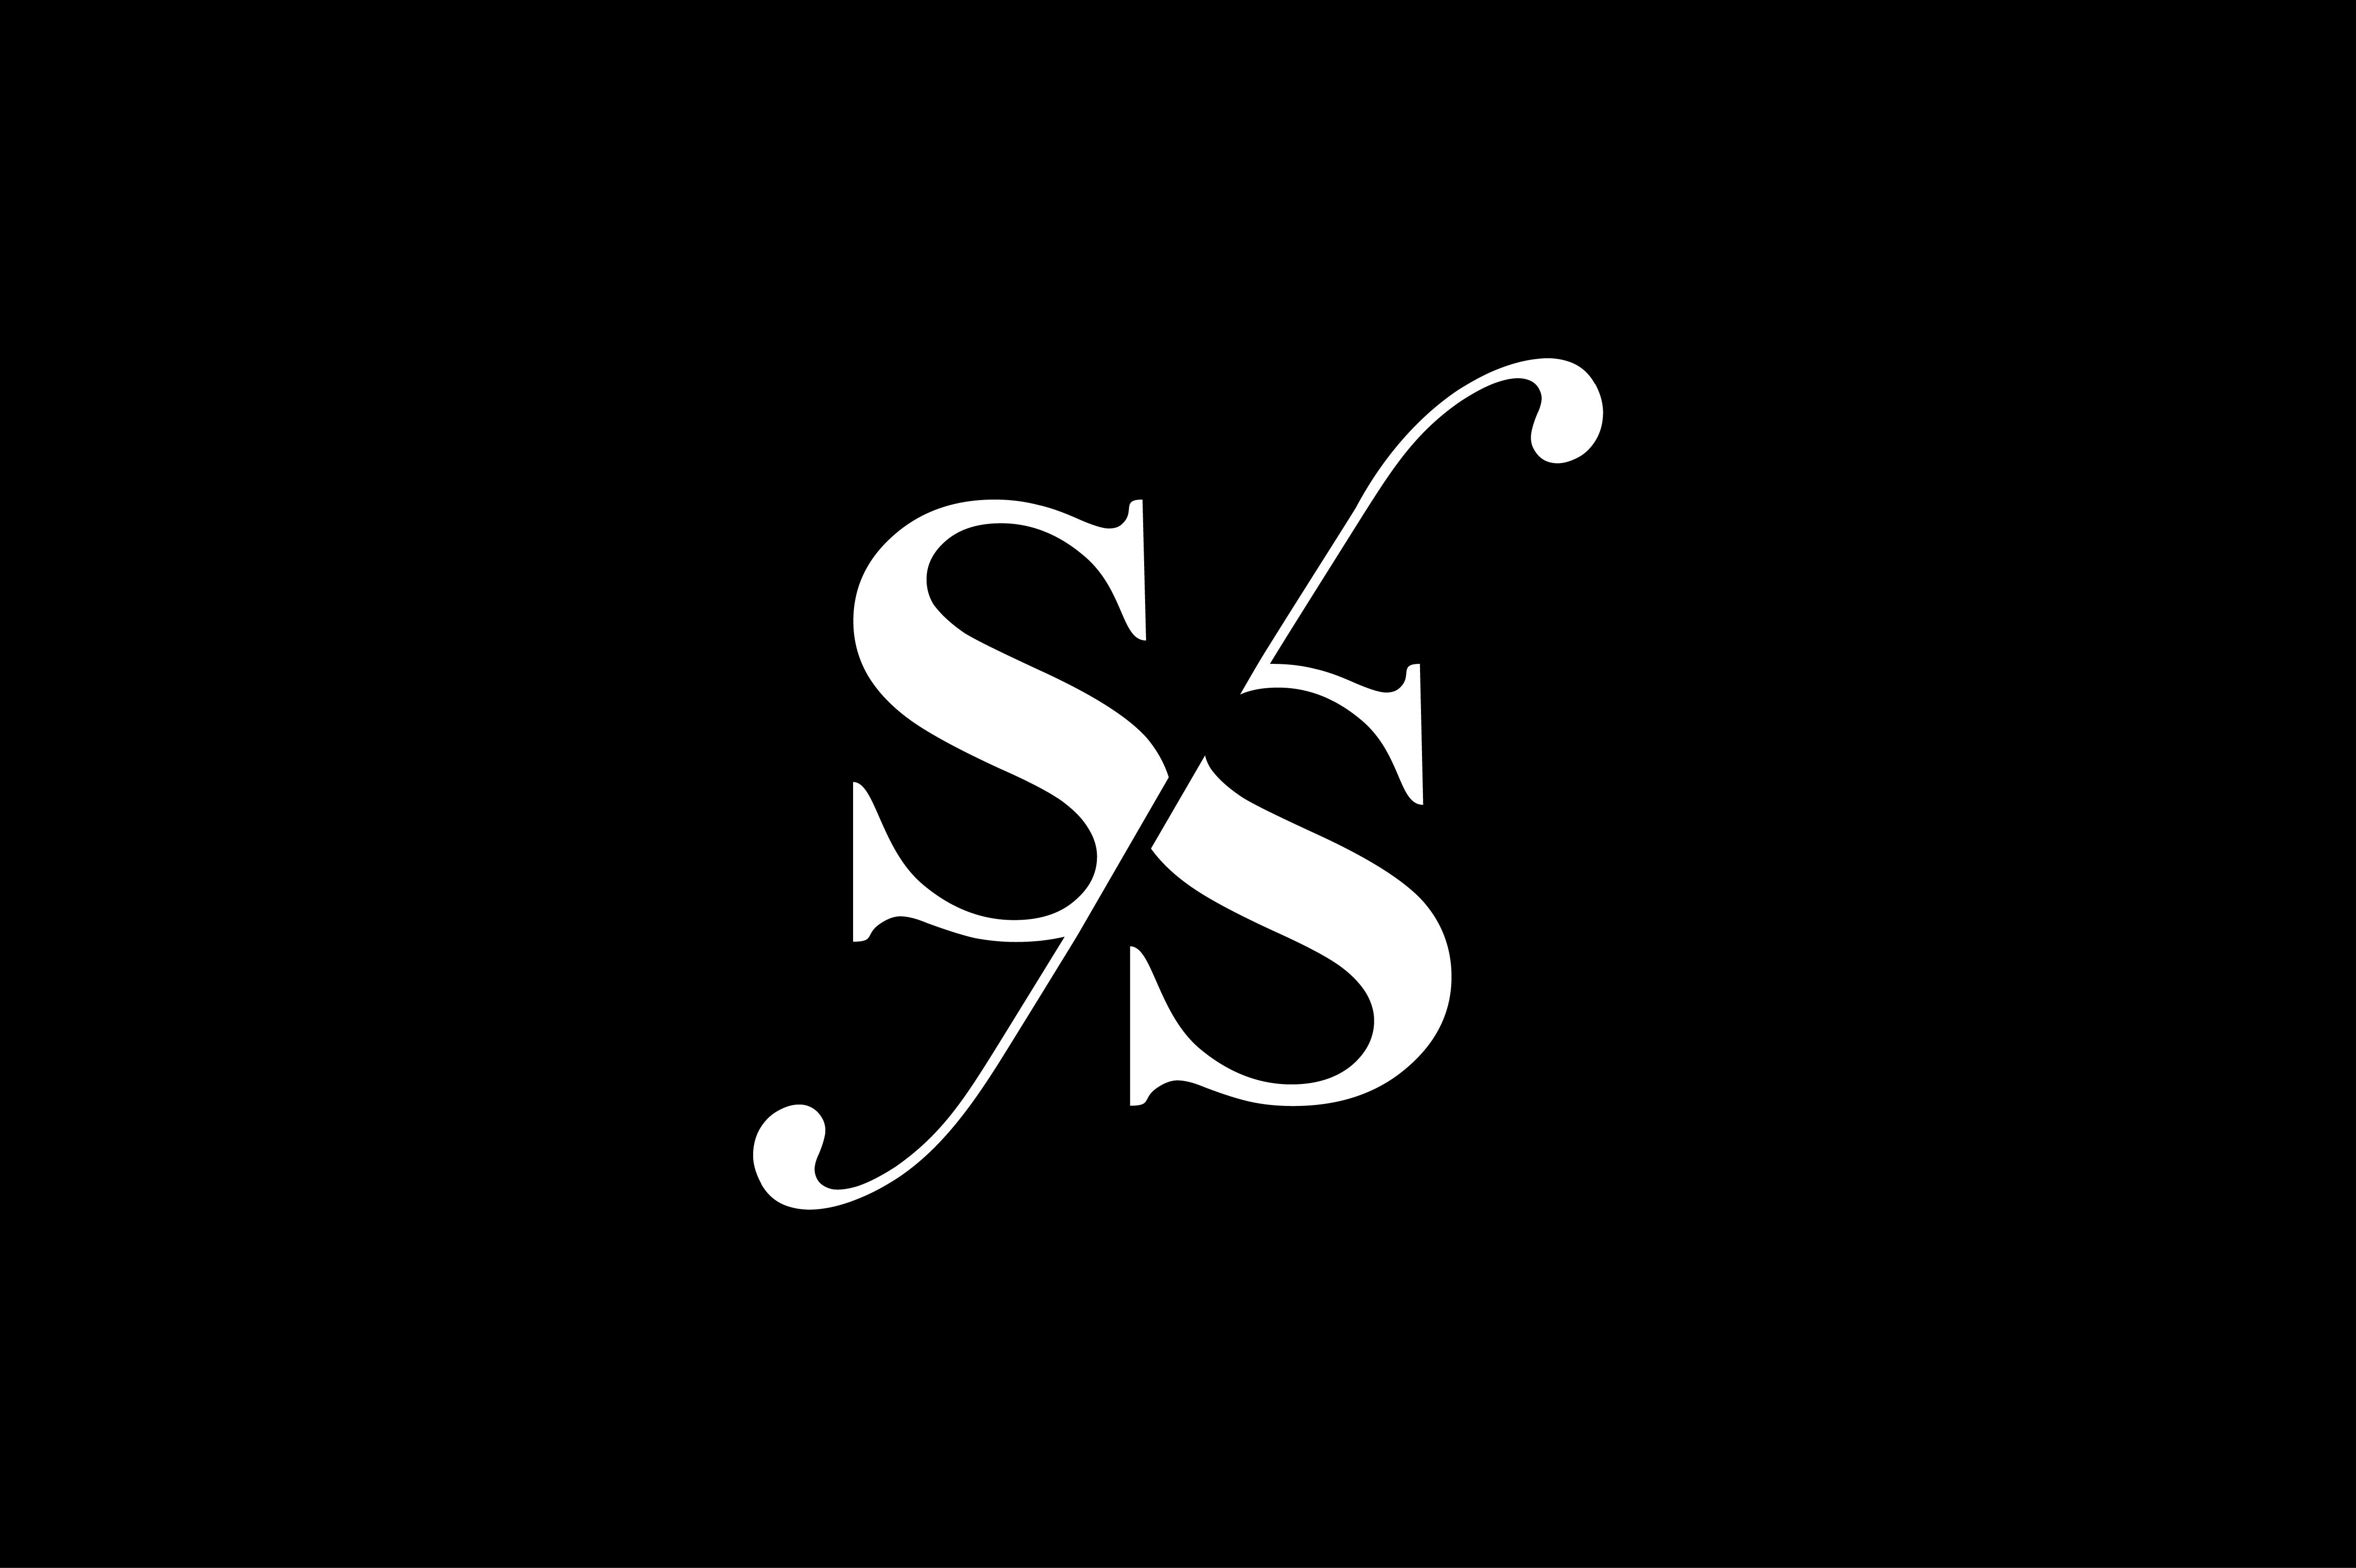 Ss Monogram Logo Design By Vectorseller Thehungryjpeg Com